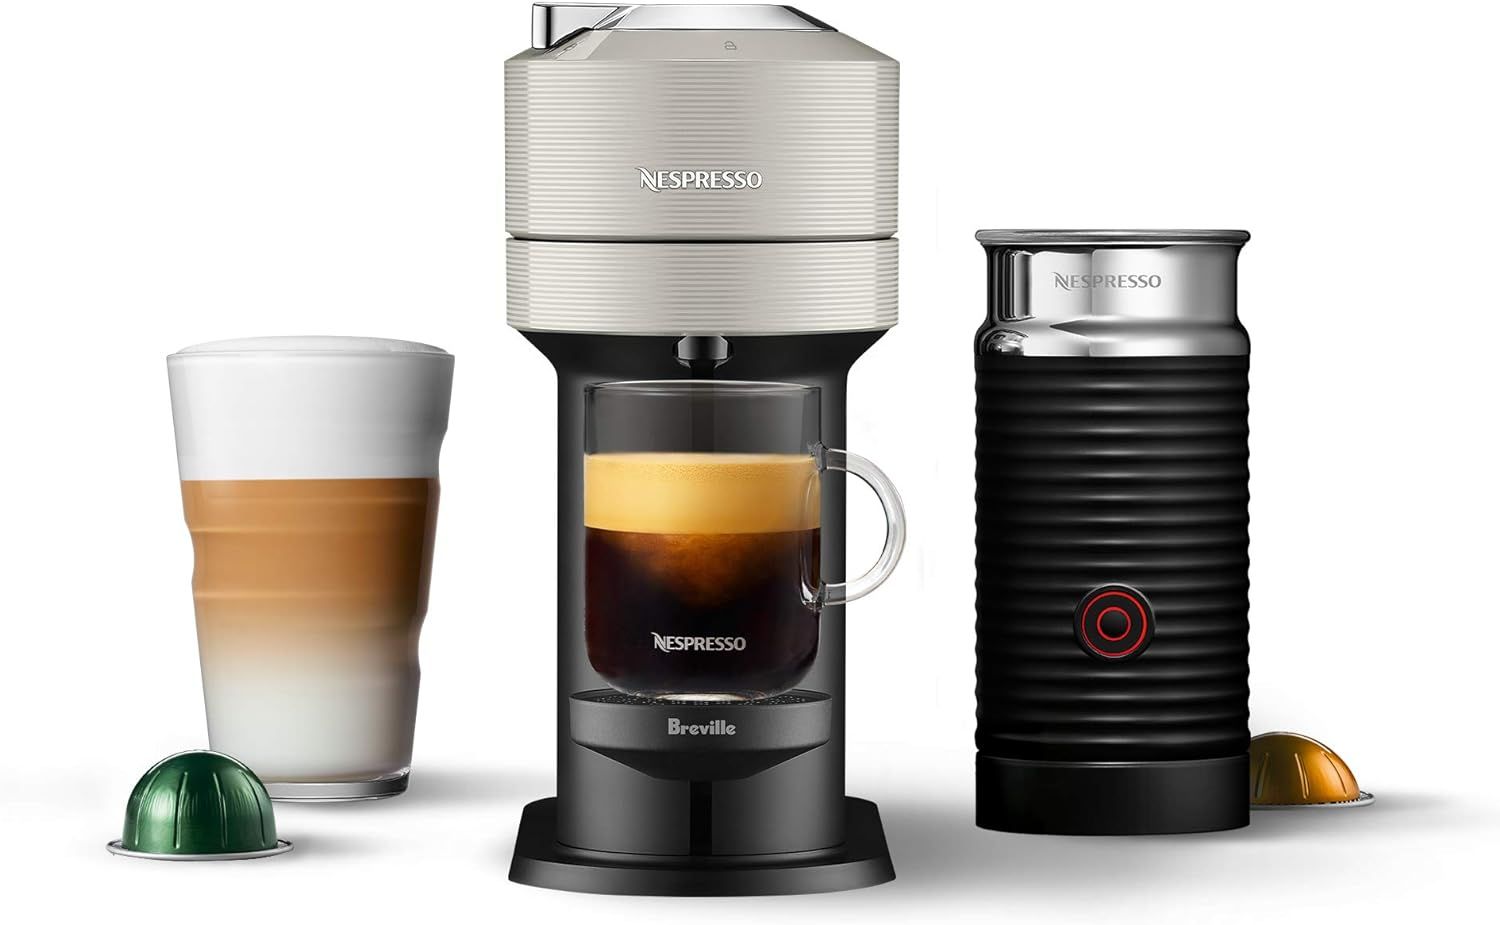 Nespresso BNV550GRY Vertuo Next Espresso Machine with Aeroccino by Breville, Light Grey | Amazon (US)